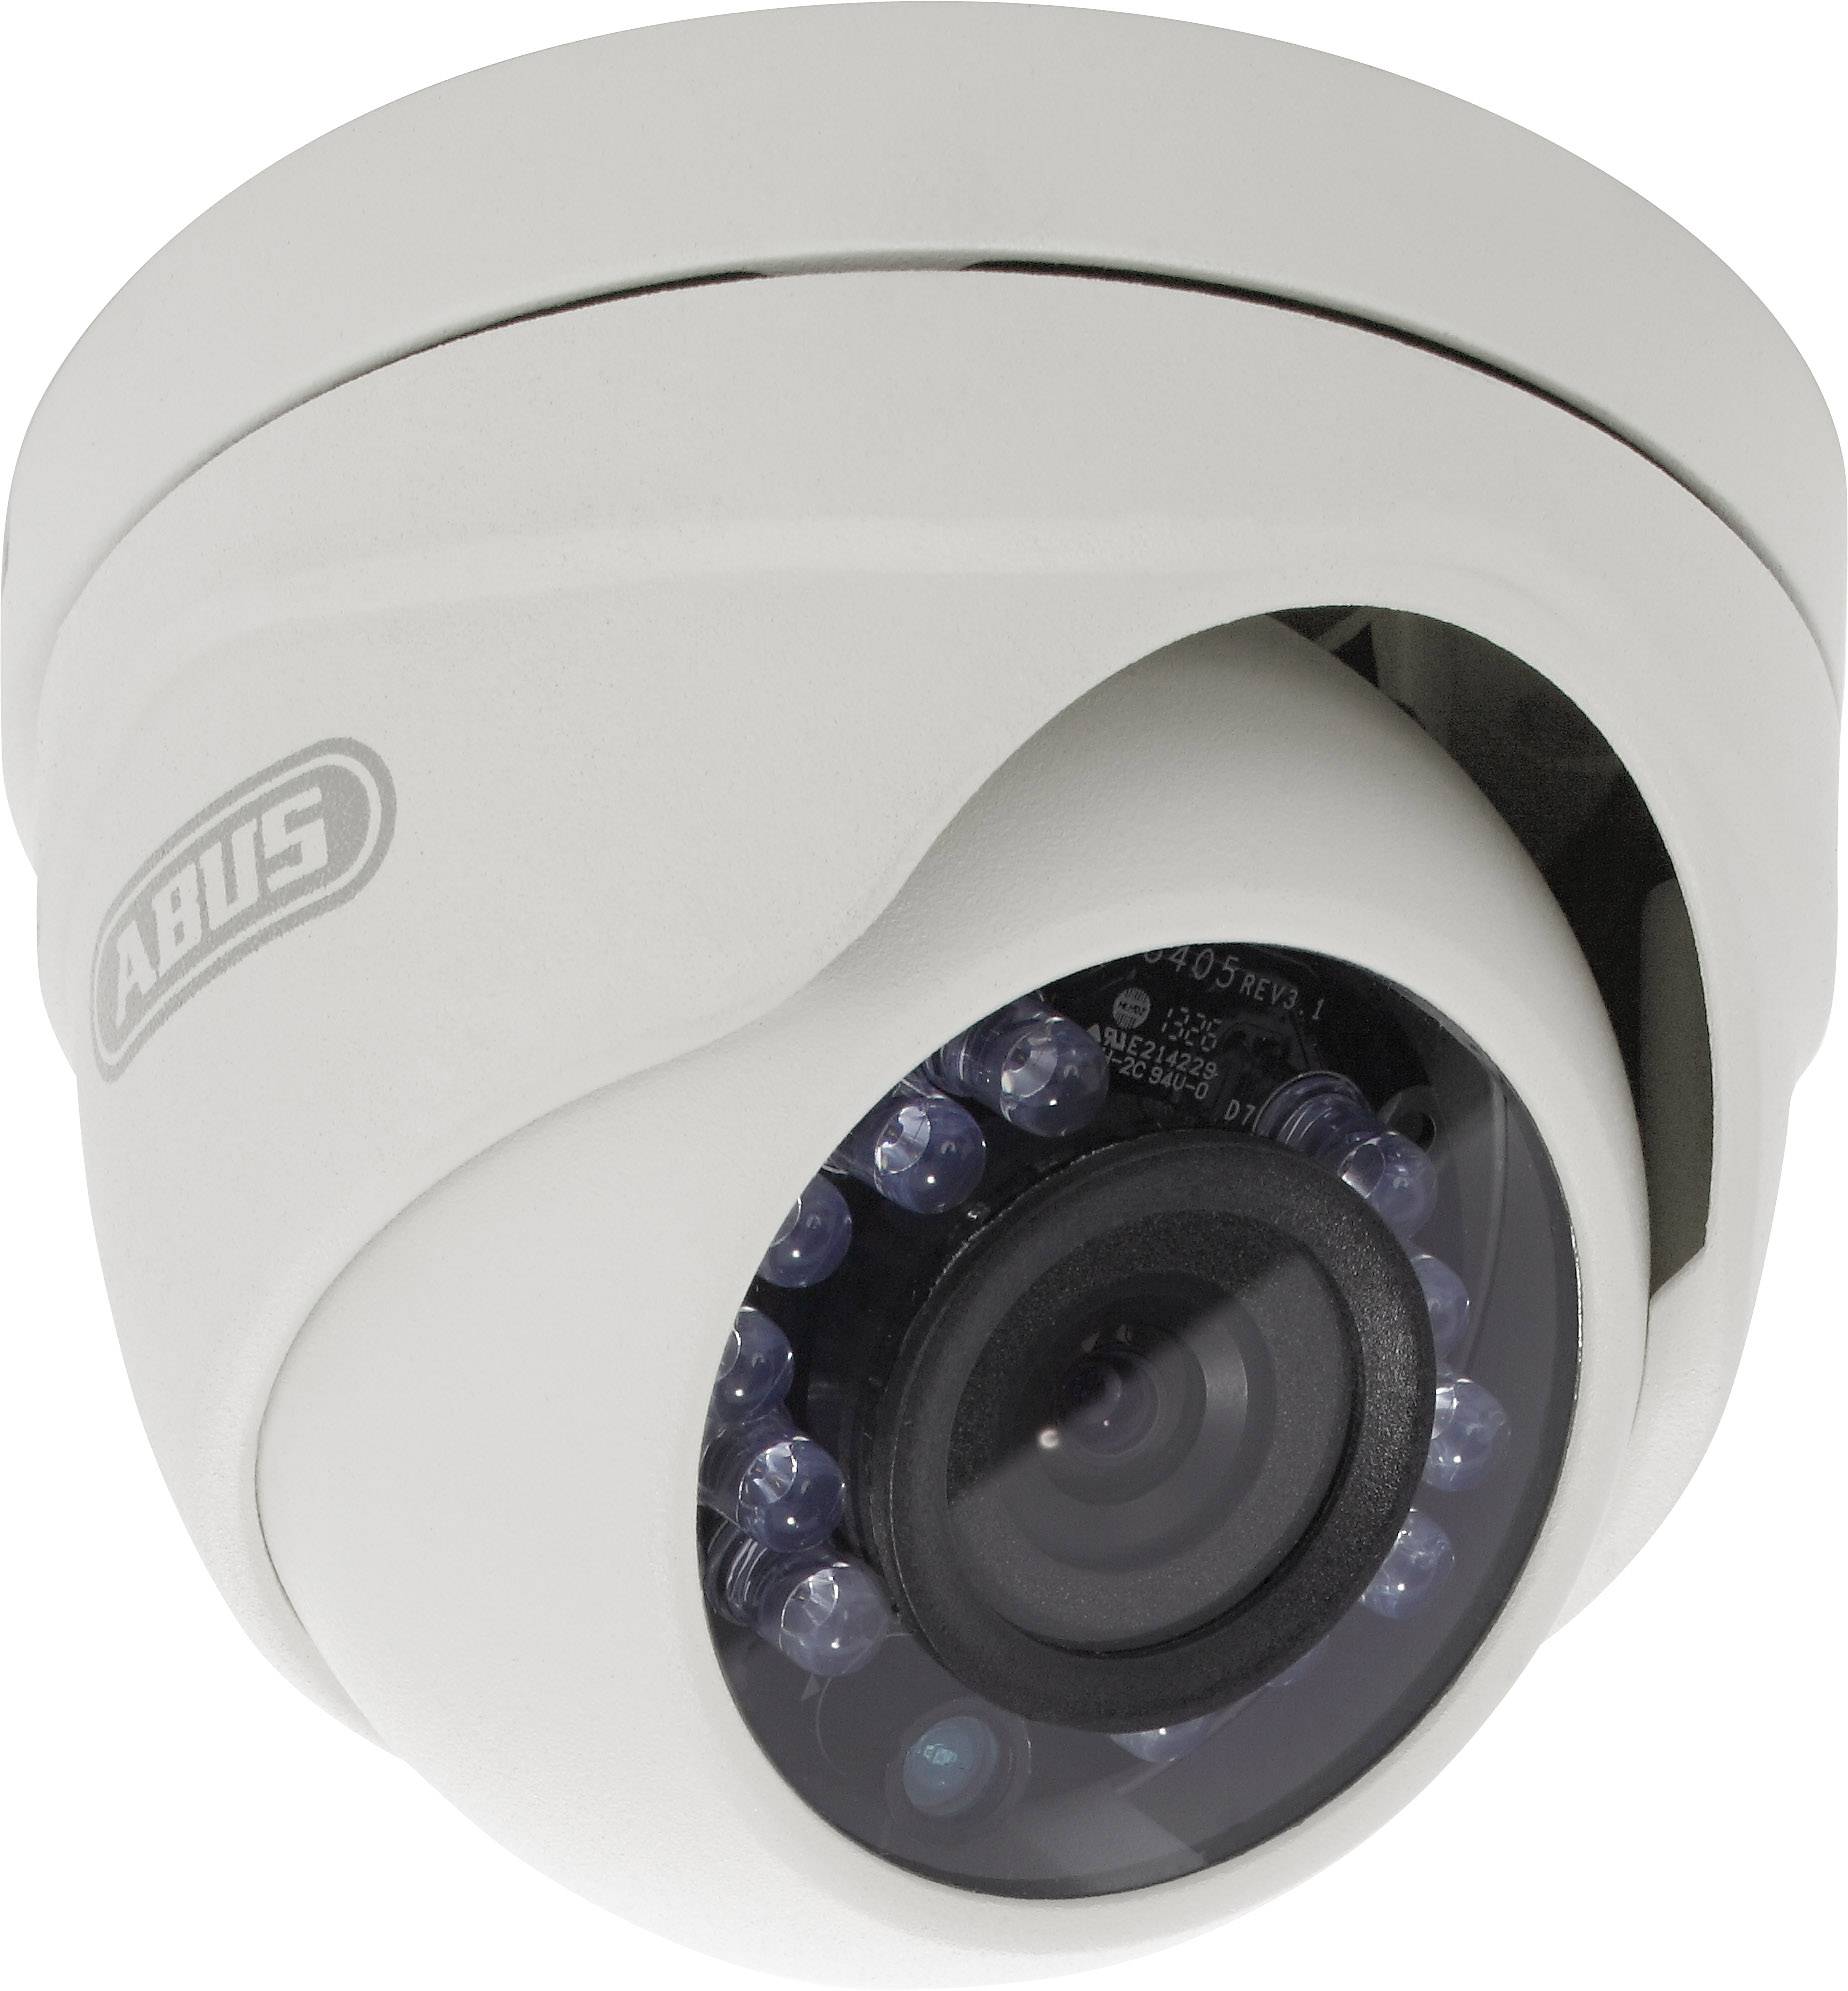 cameras de surveillance exterieur